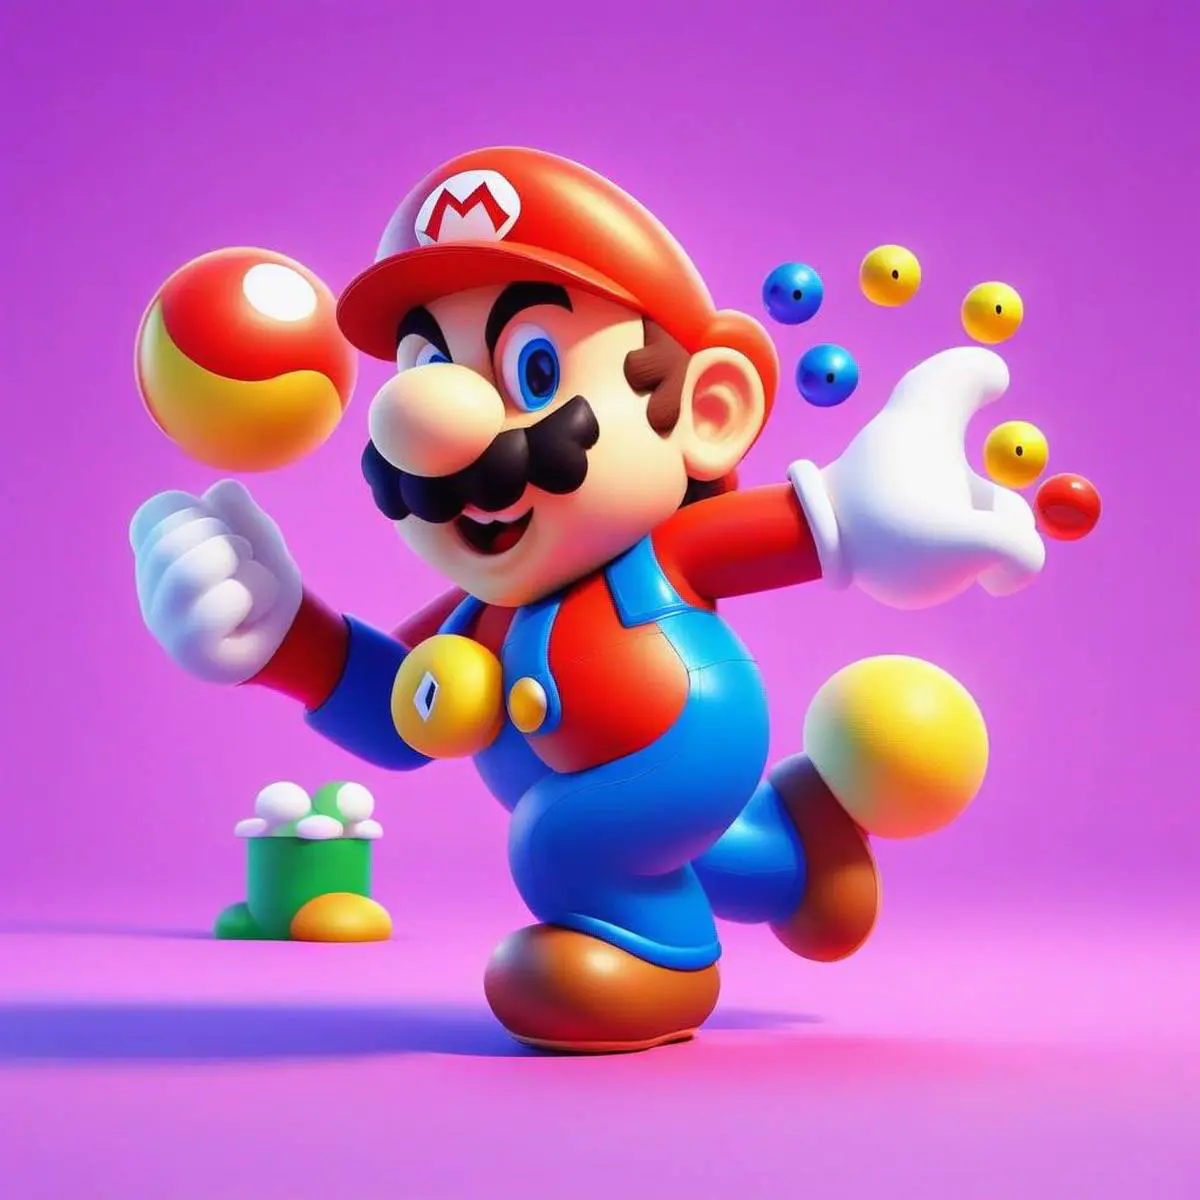 Mario puns